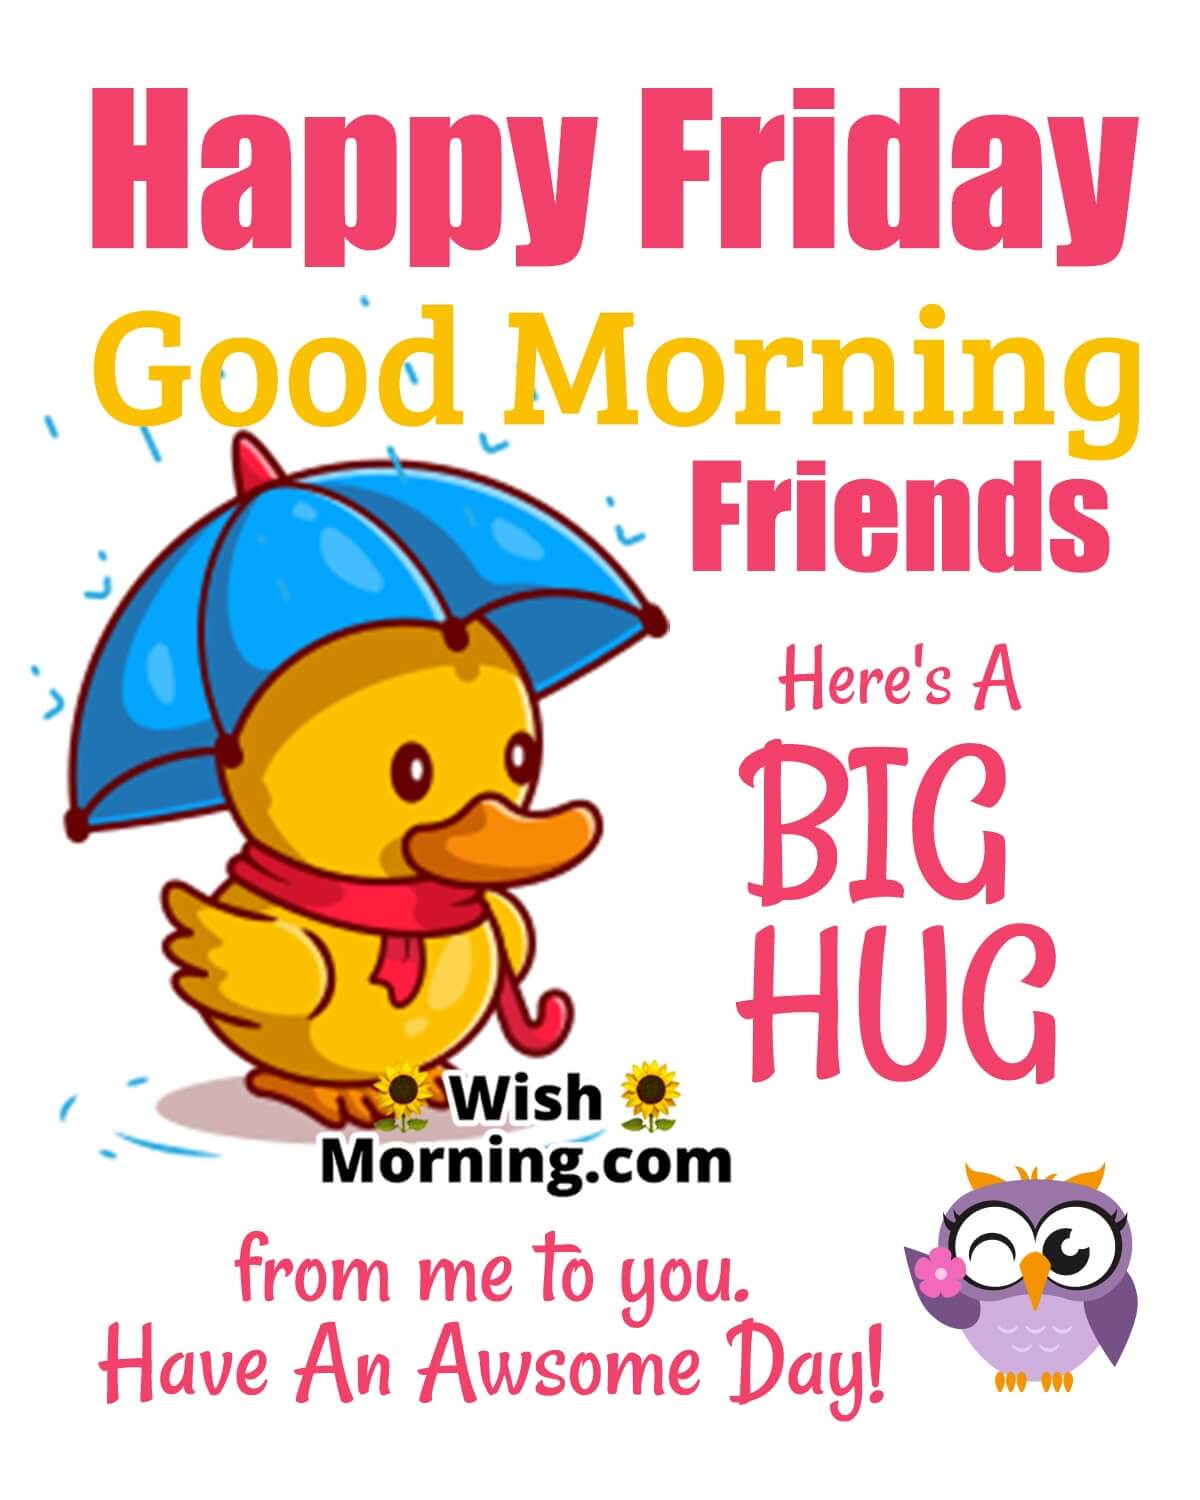 Happy Friday Good Morning Friends